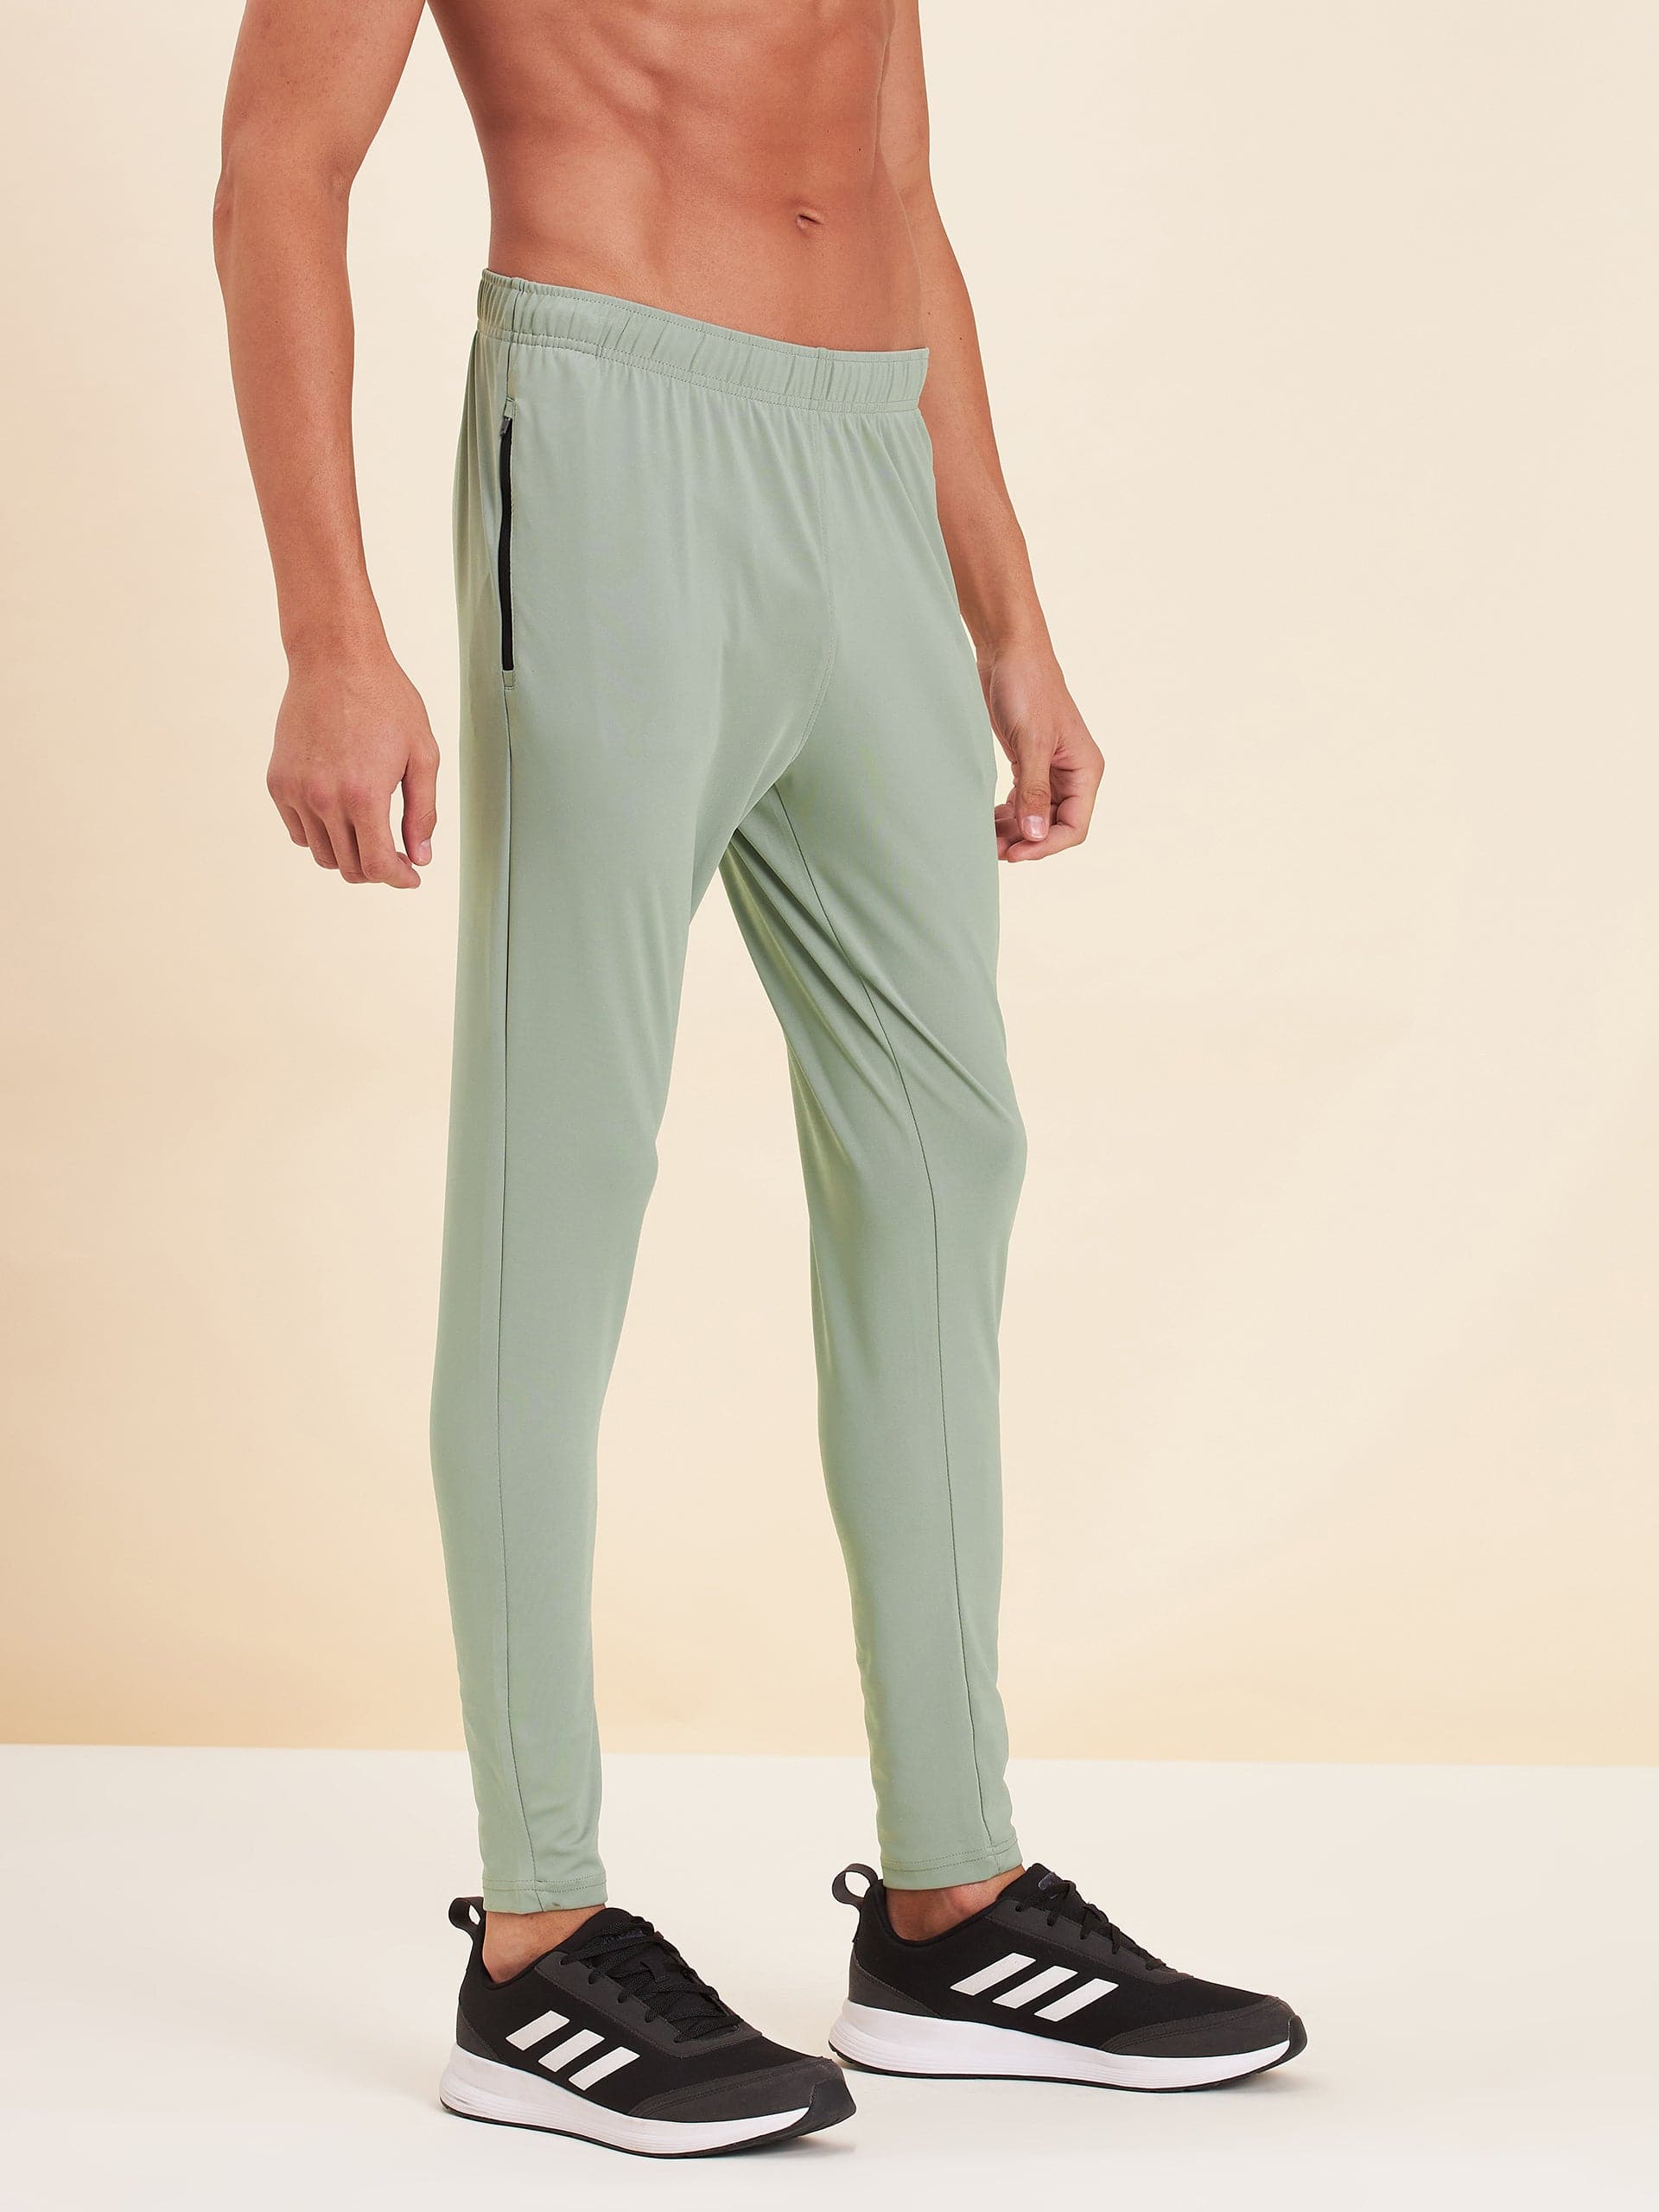 Men's Olive Dry Fit Stretchable Slim Track Pants - LYUSH-MASCLN